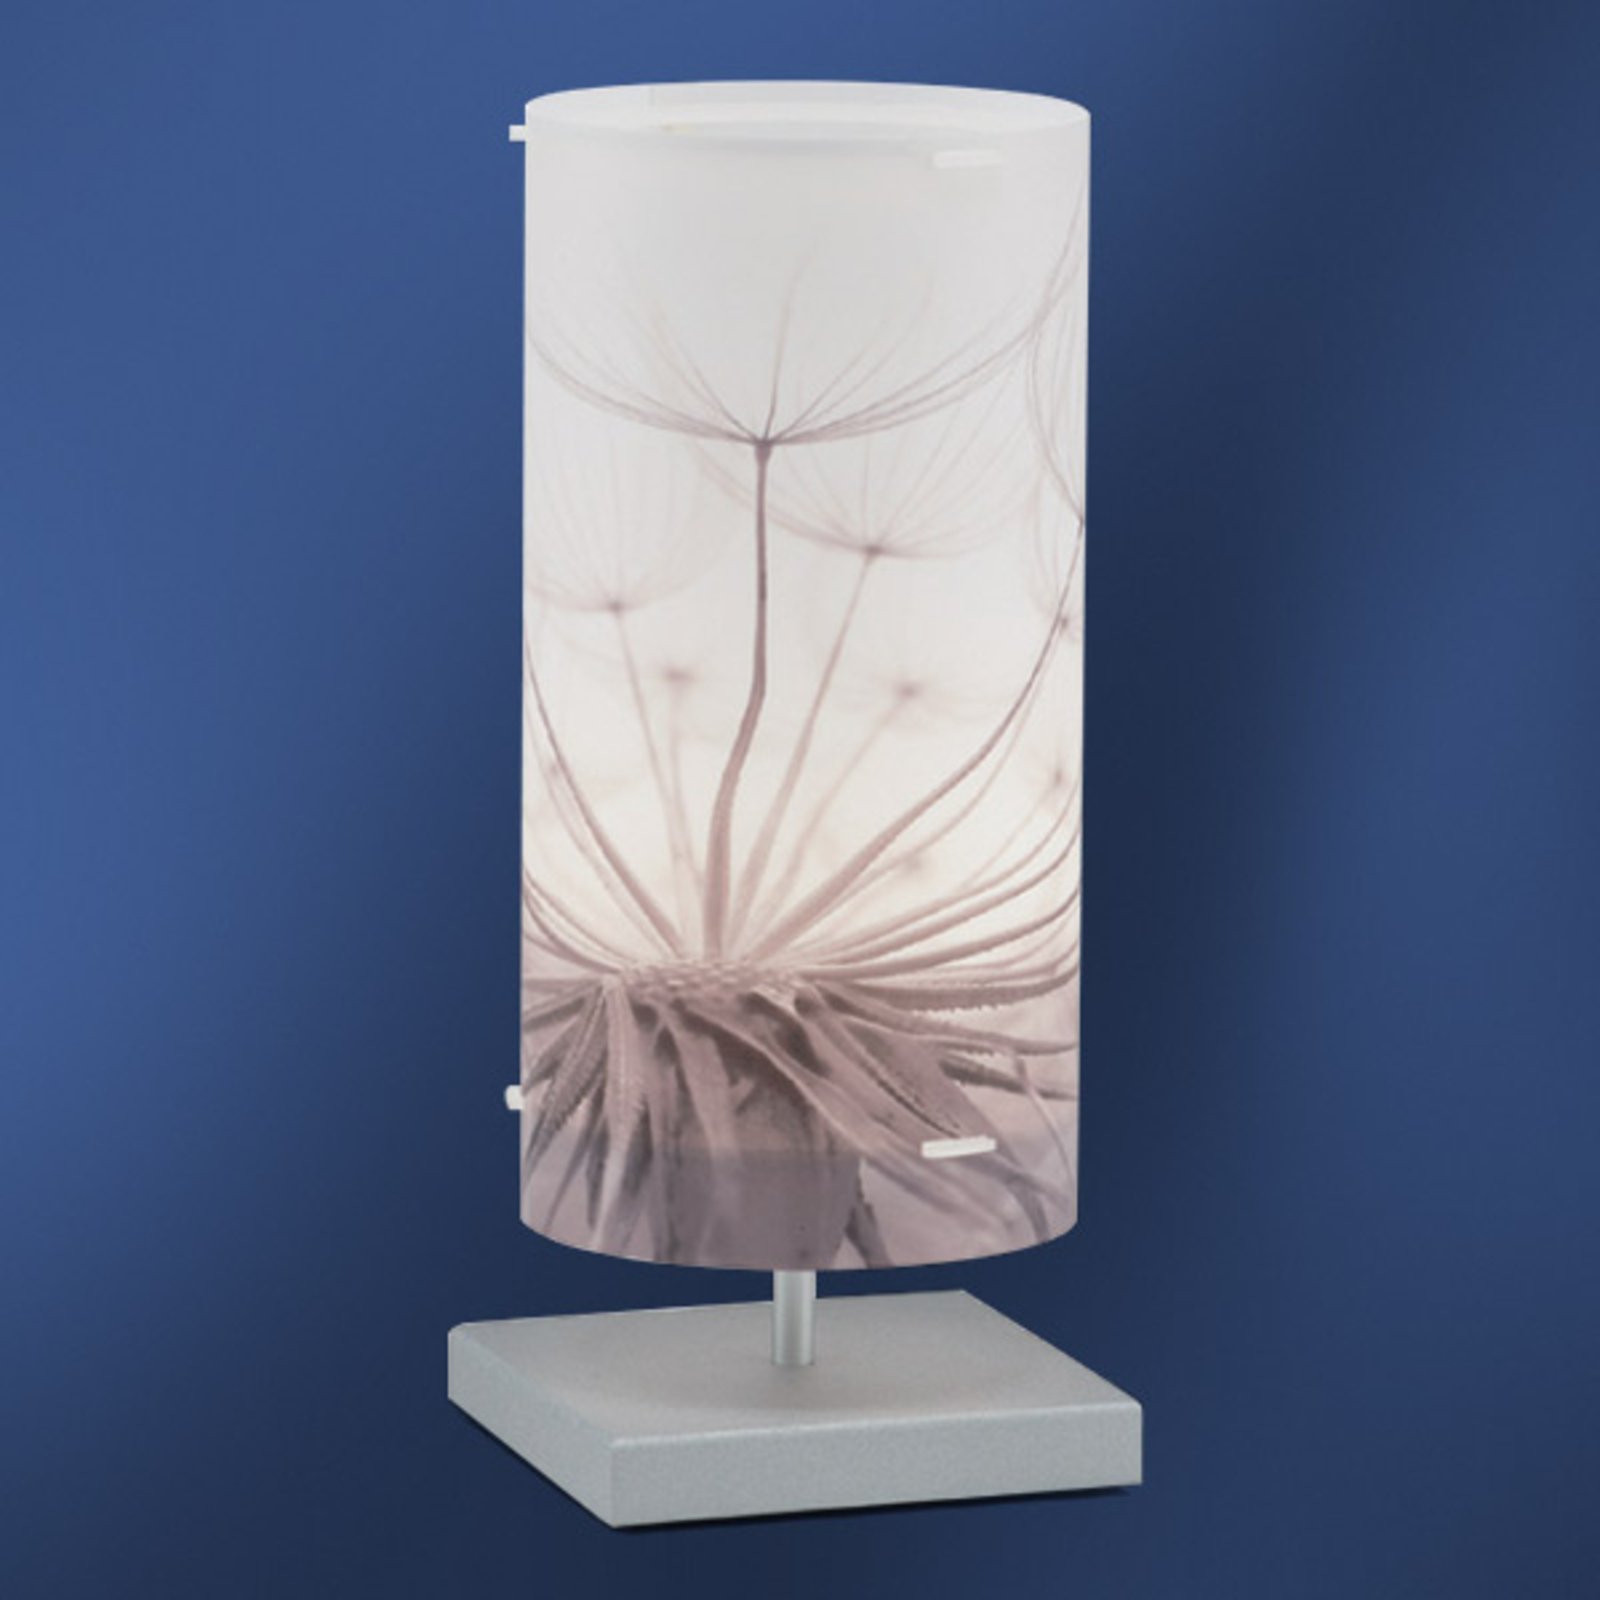 Dandelion - bordslampa i naturlig design